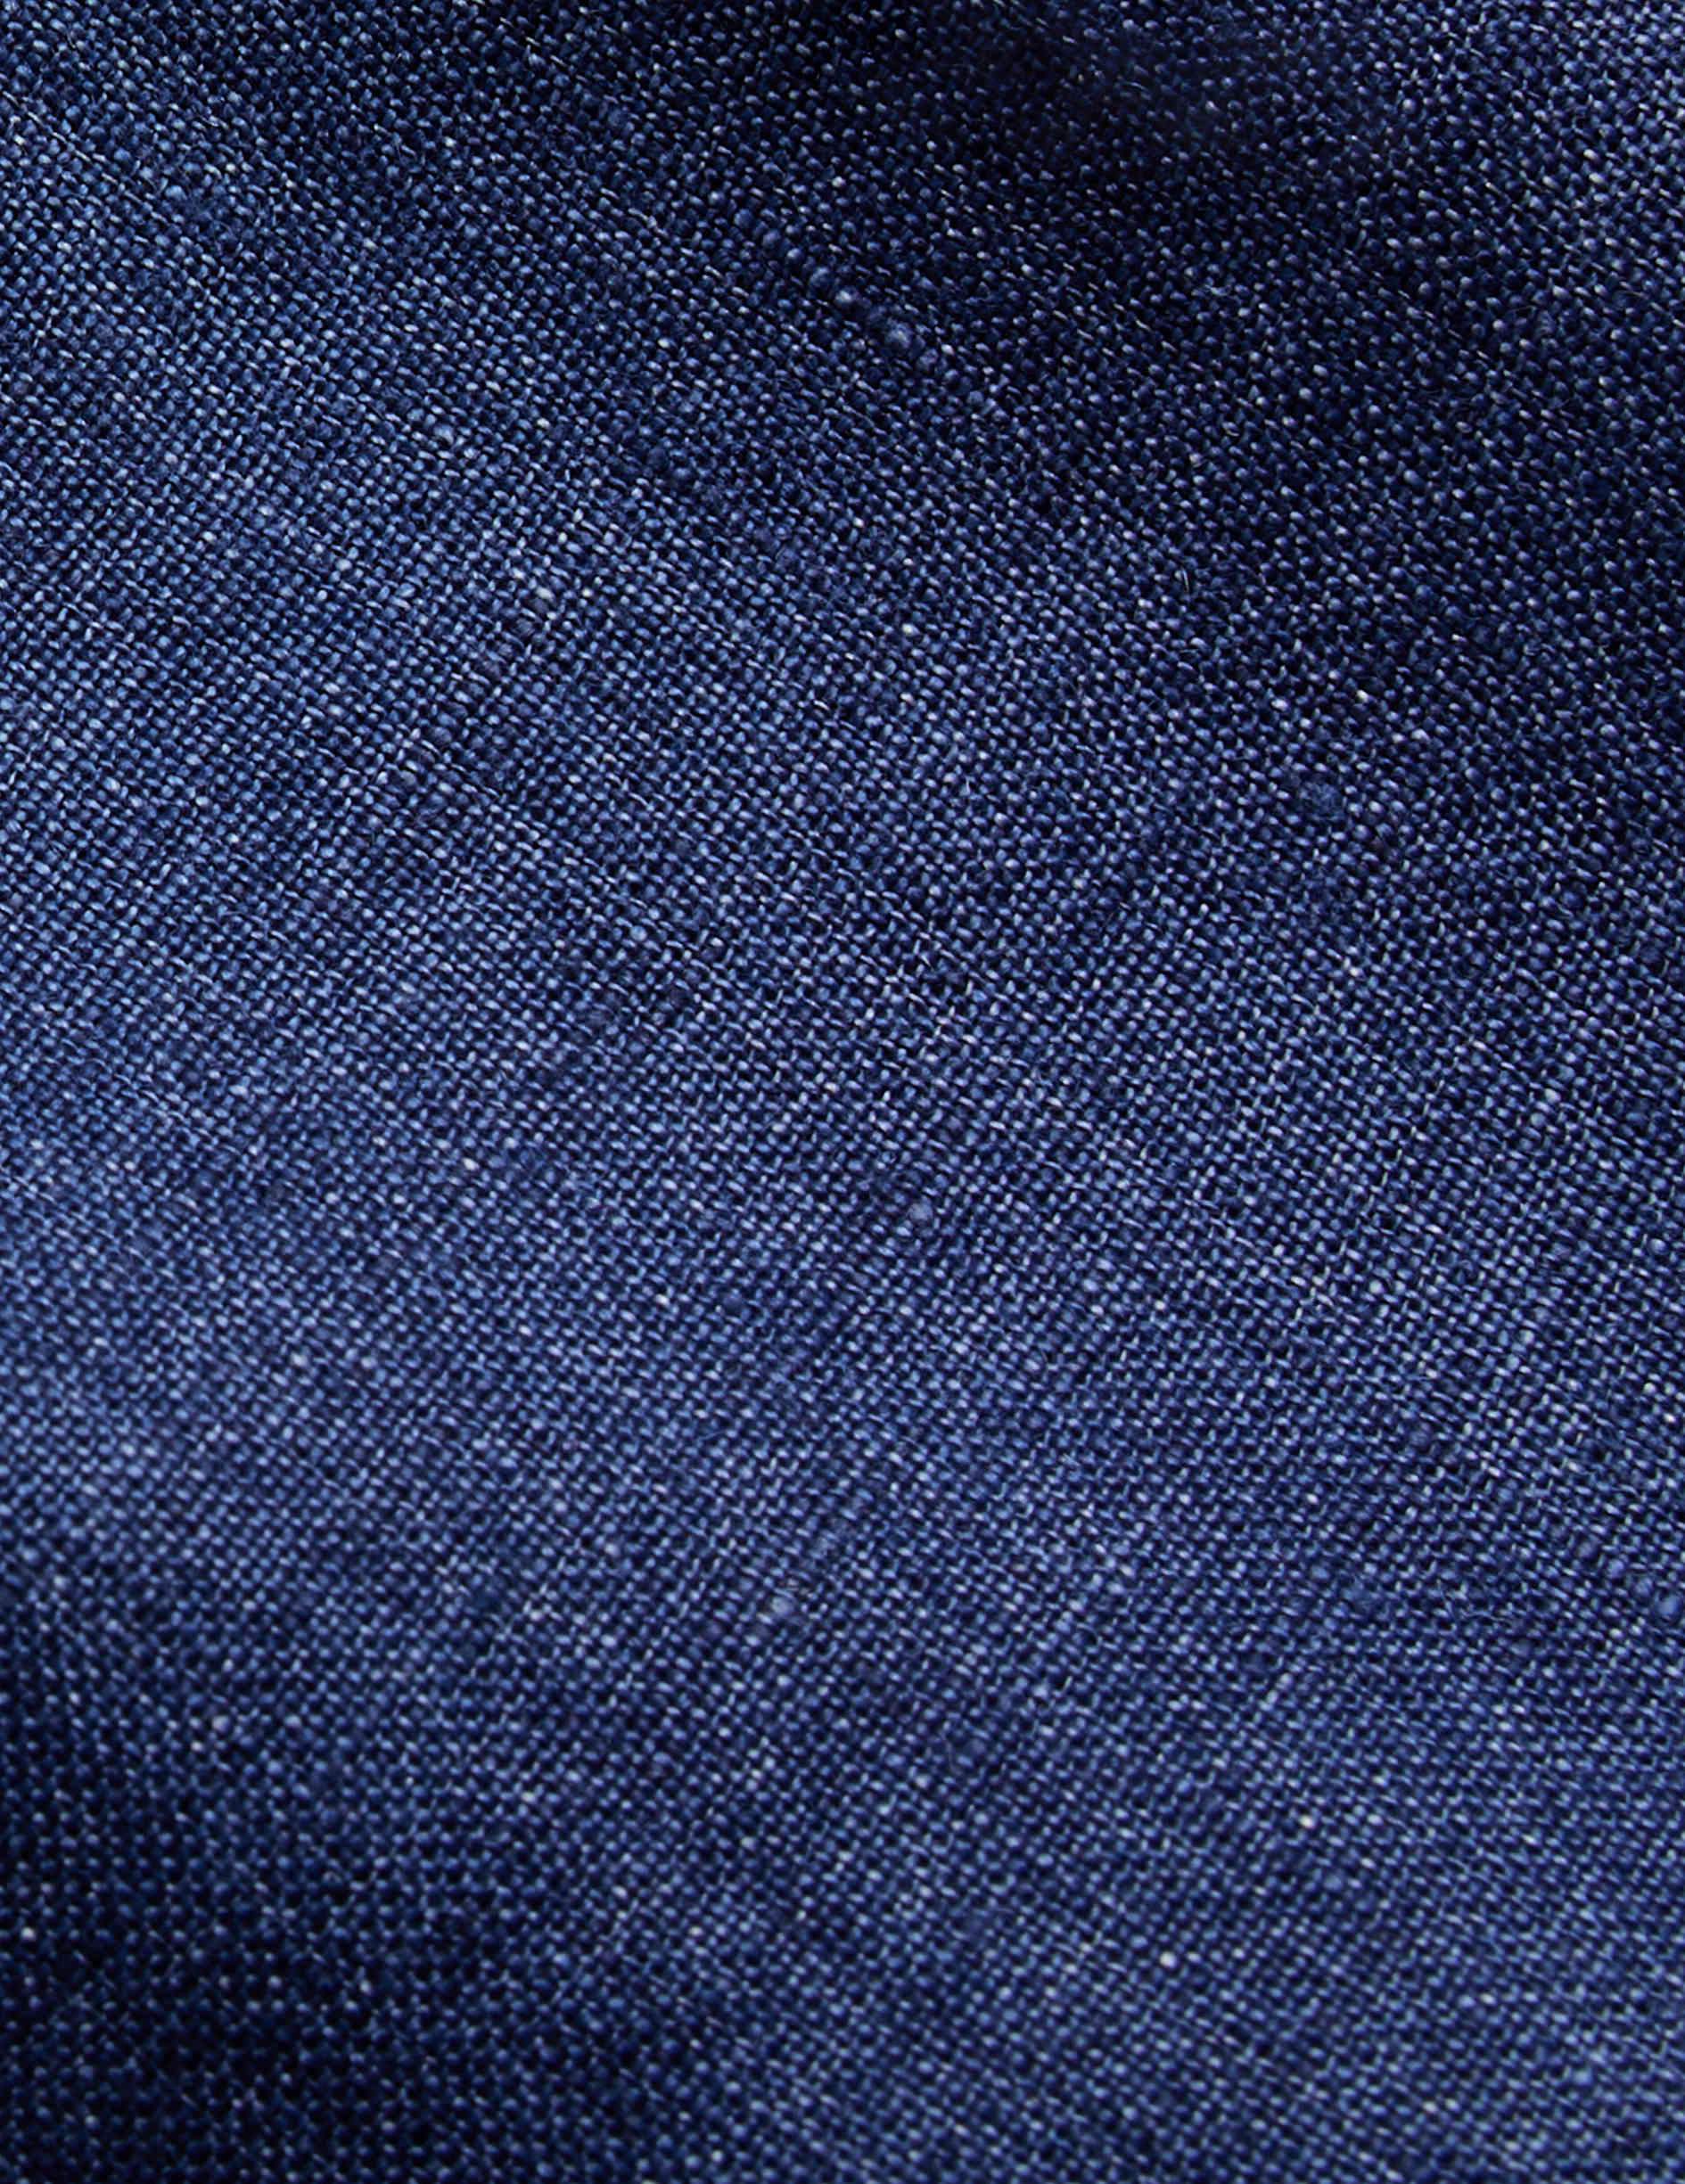 Aristote shirt in dark blue linen - Linen - Italian Collar